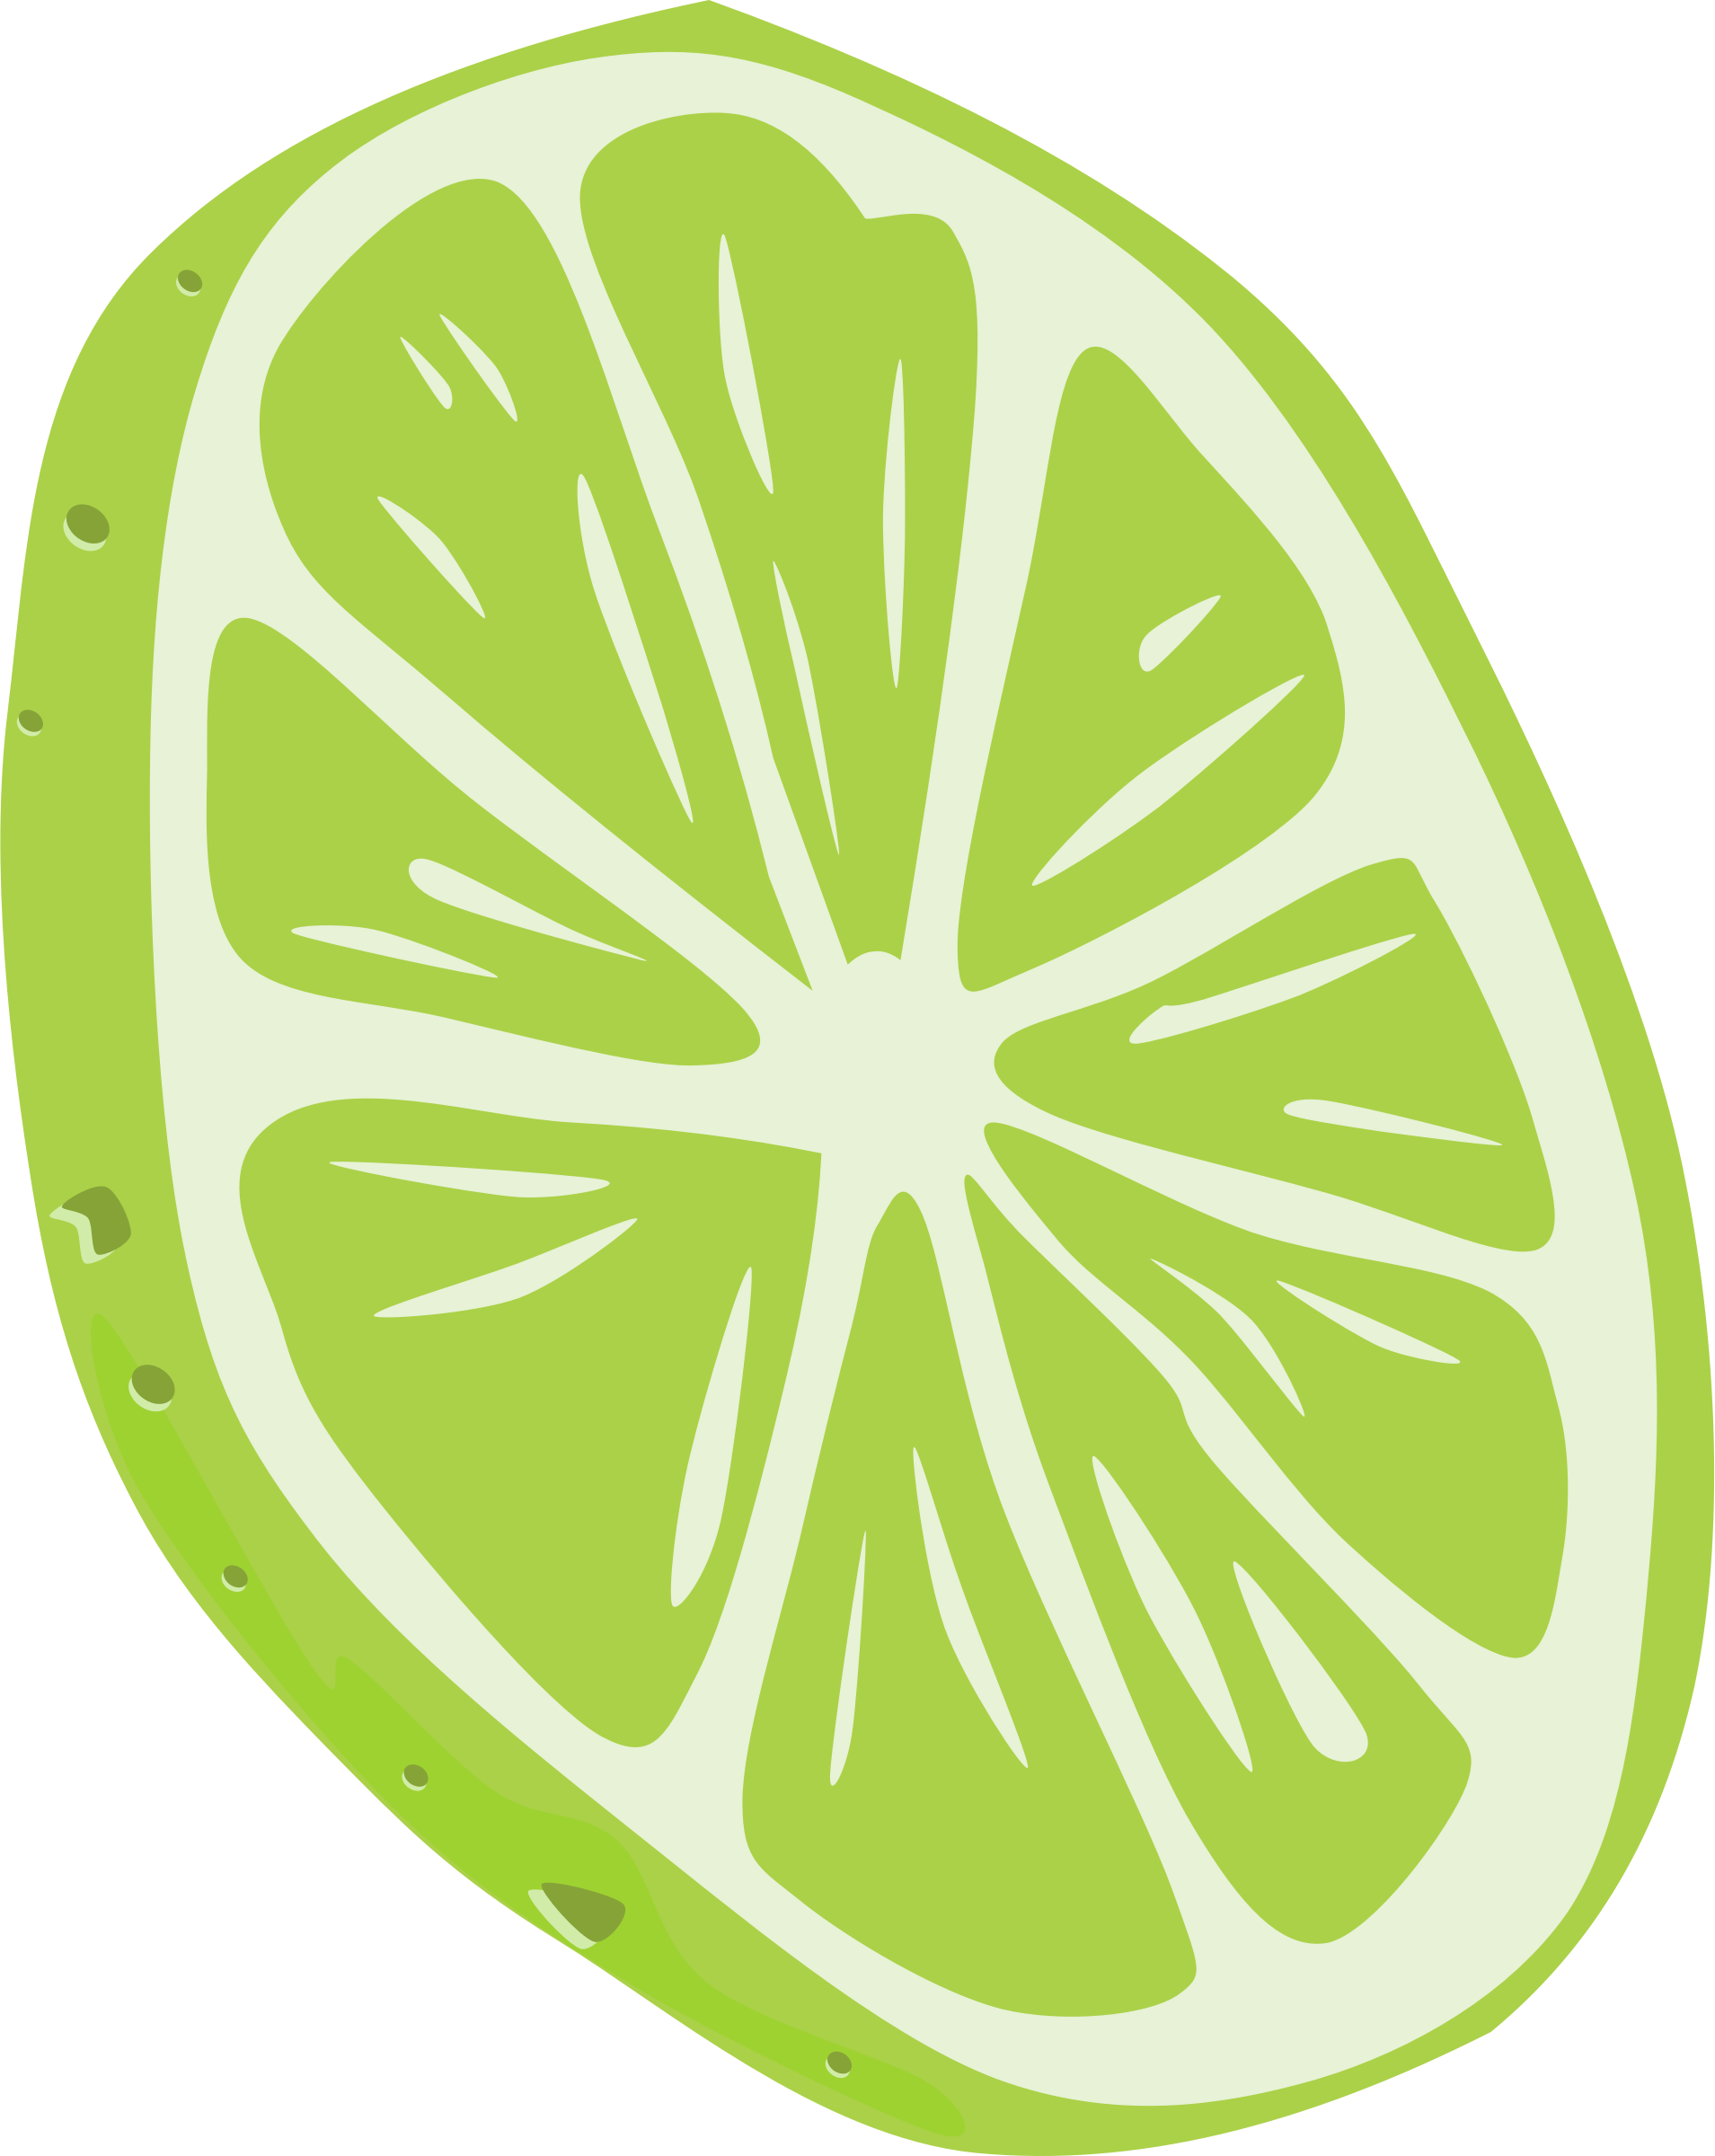 Laranja verde, limão